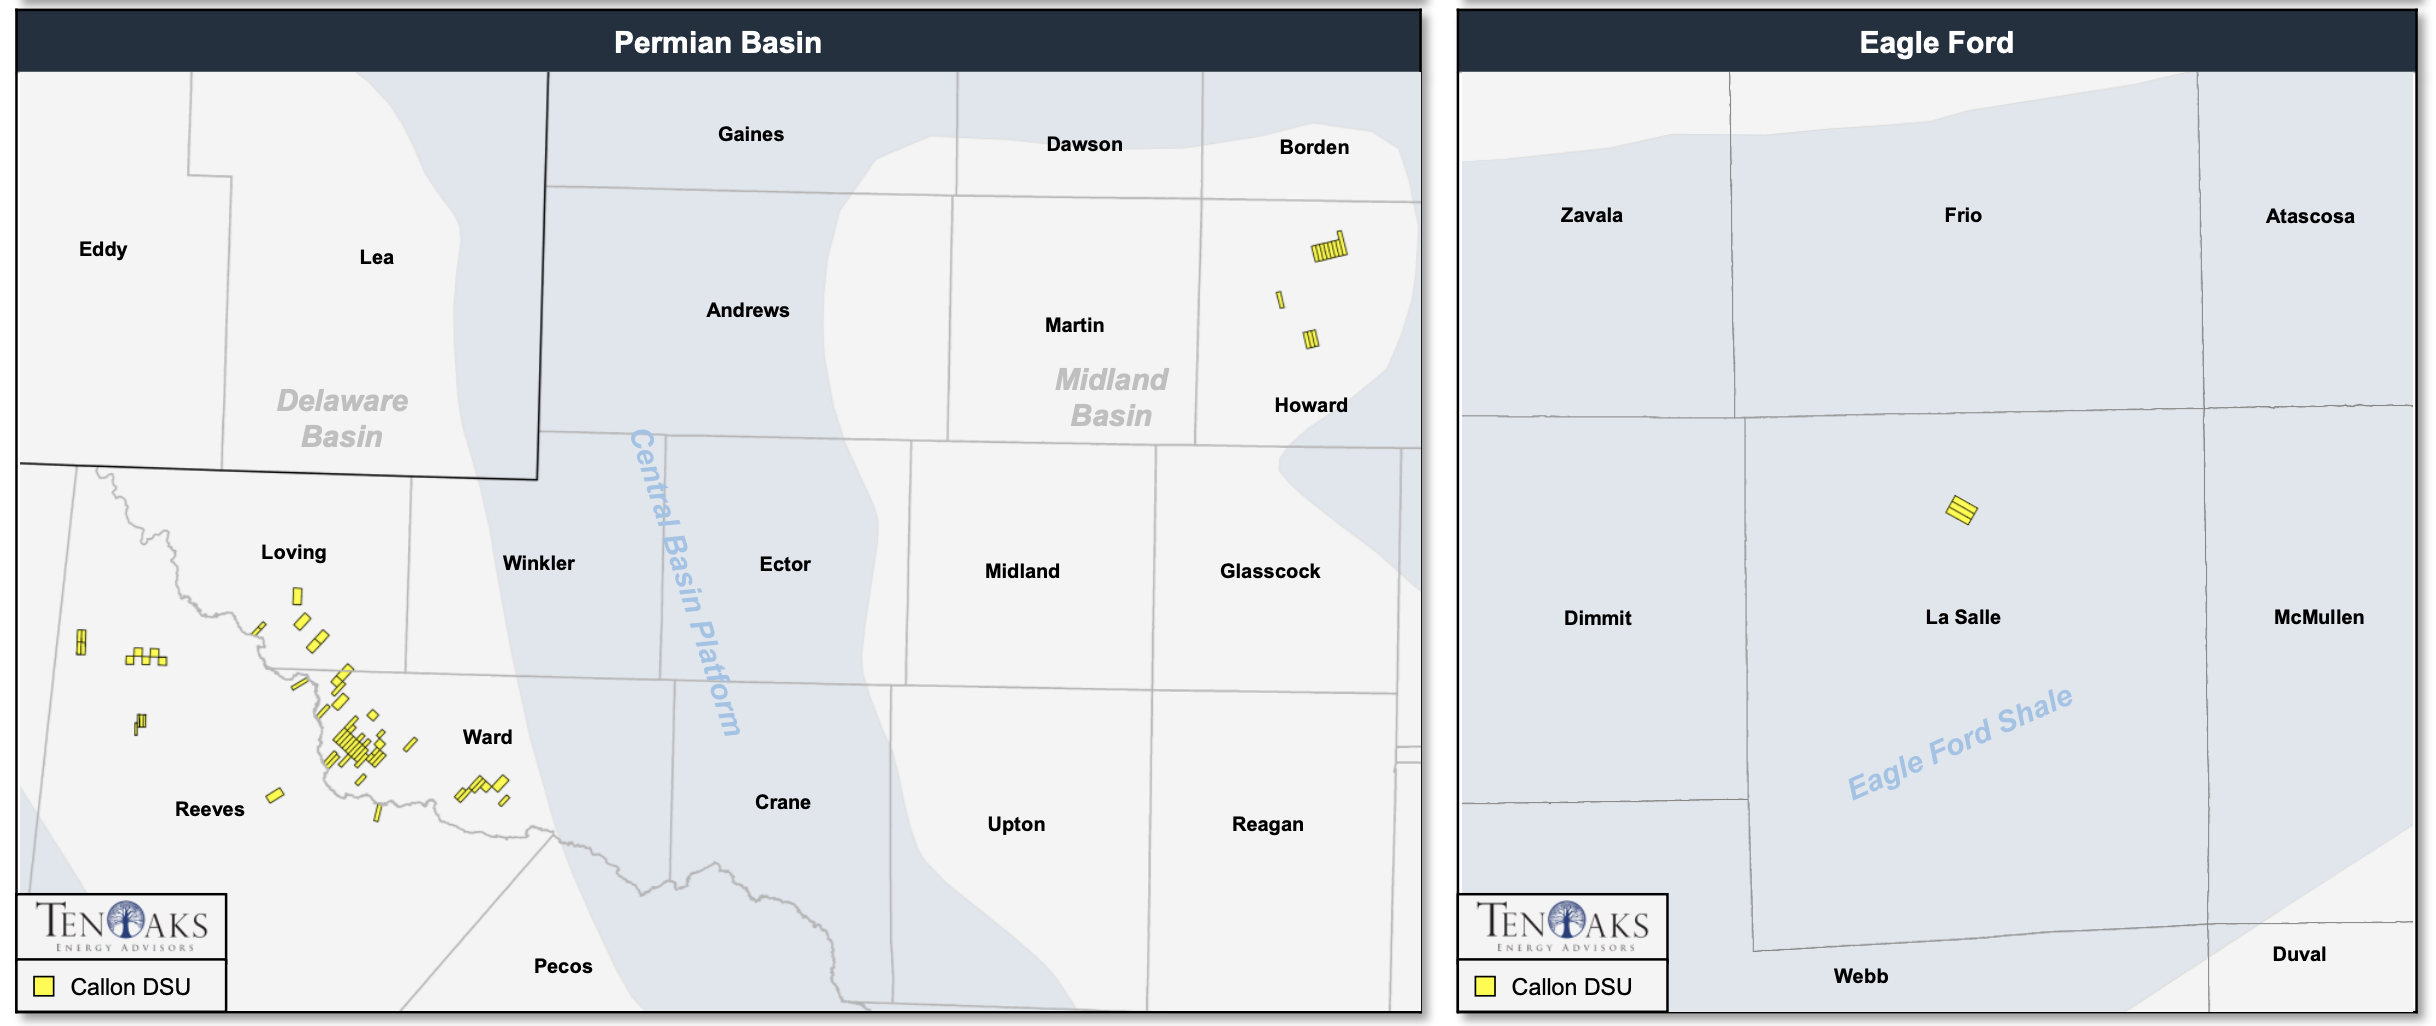 Marketed: Callon Petroleum Nonop Permian Basin, Eagle Ford Portfolio